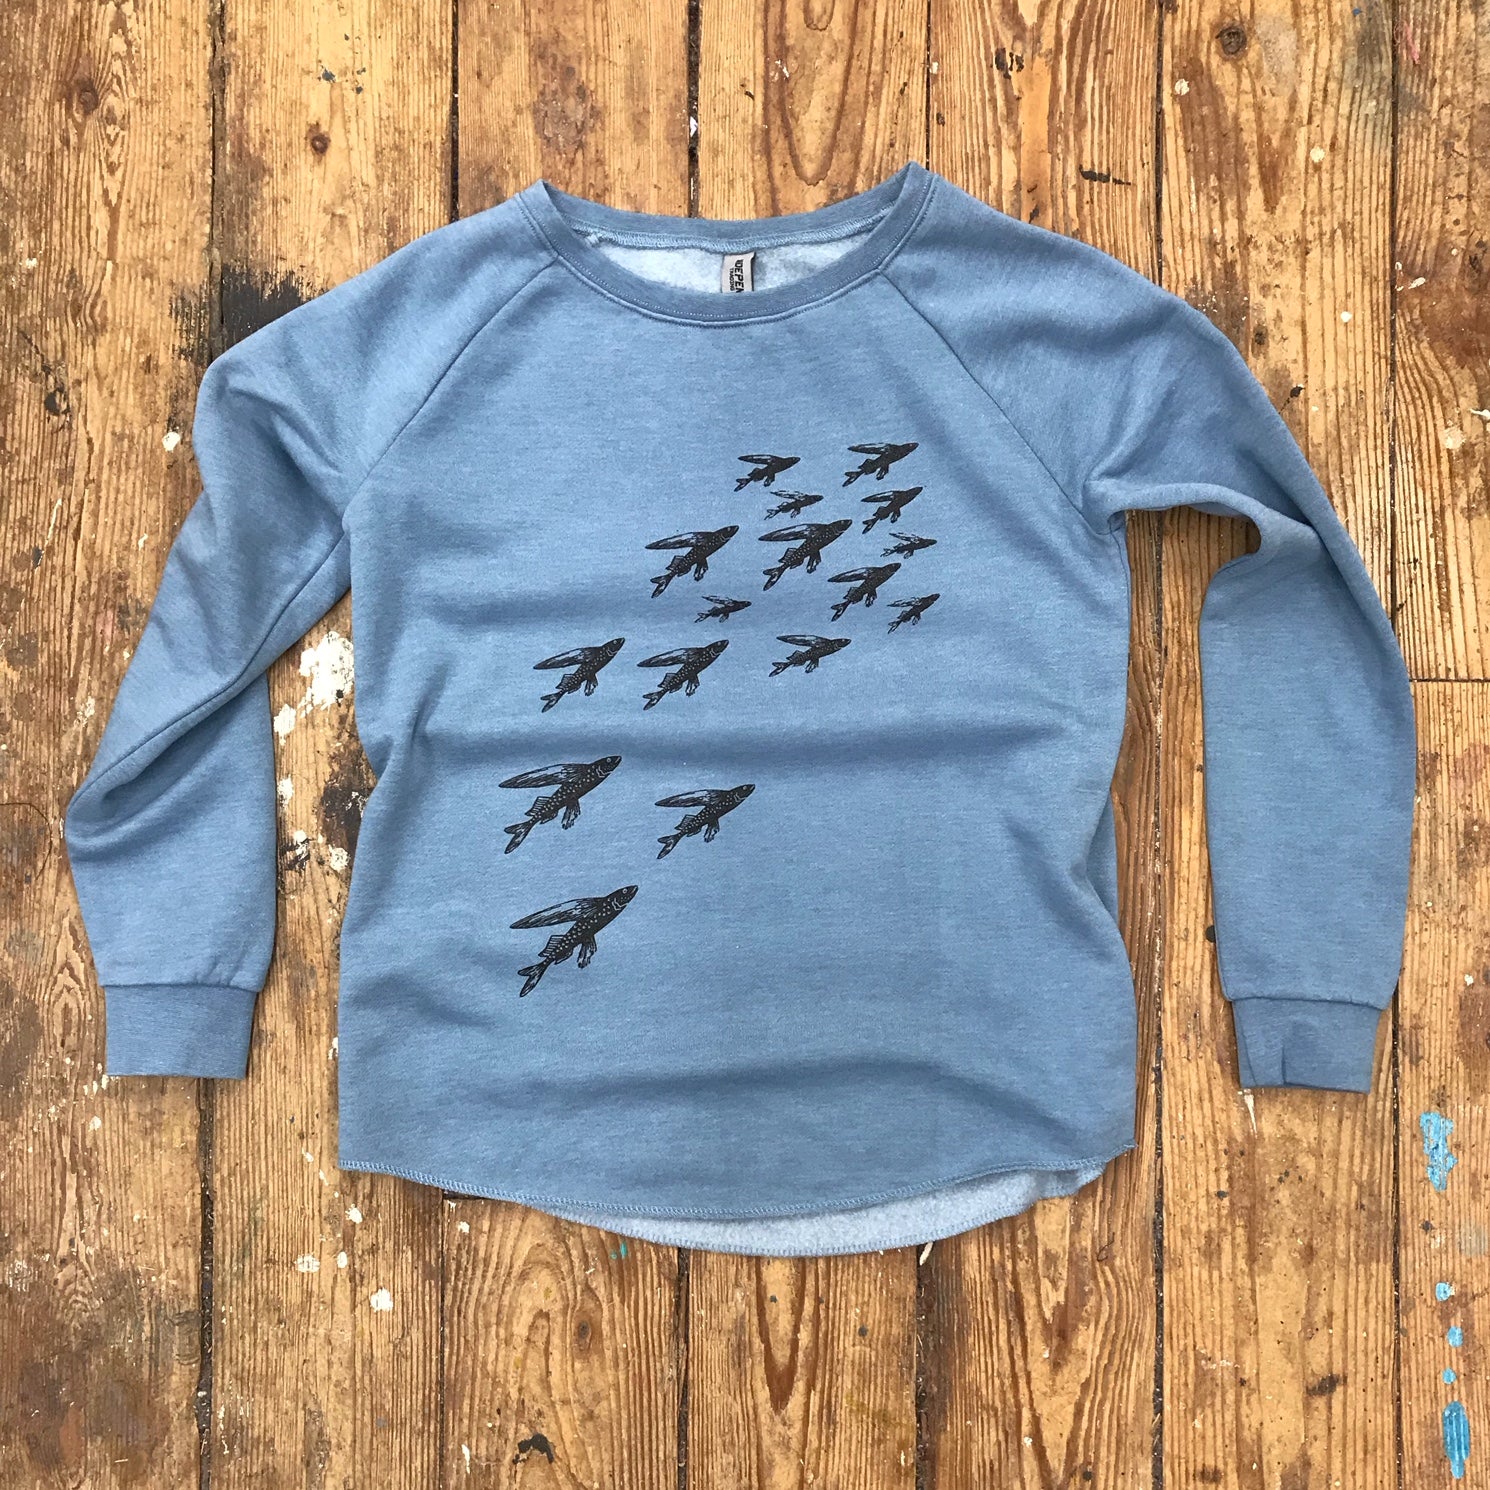 Misty blue sweatshirt featuring the 'School of Fish' design in black ink.